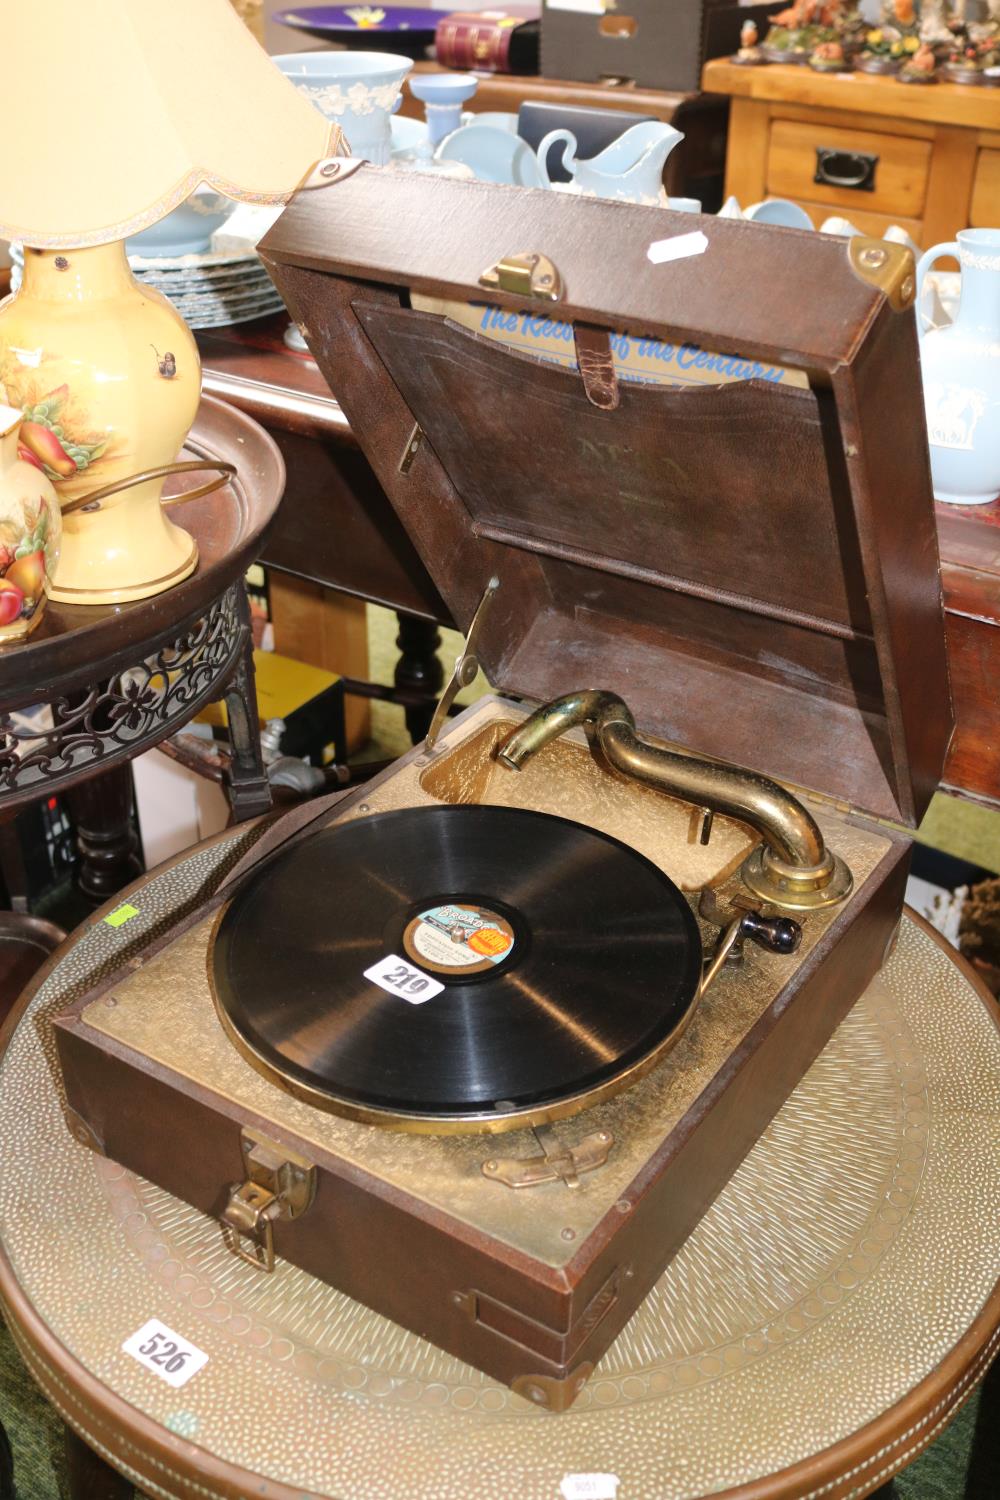 Vintage Alba portable record player